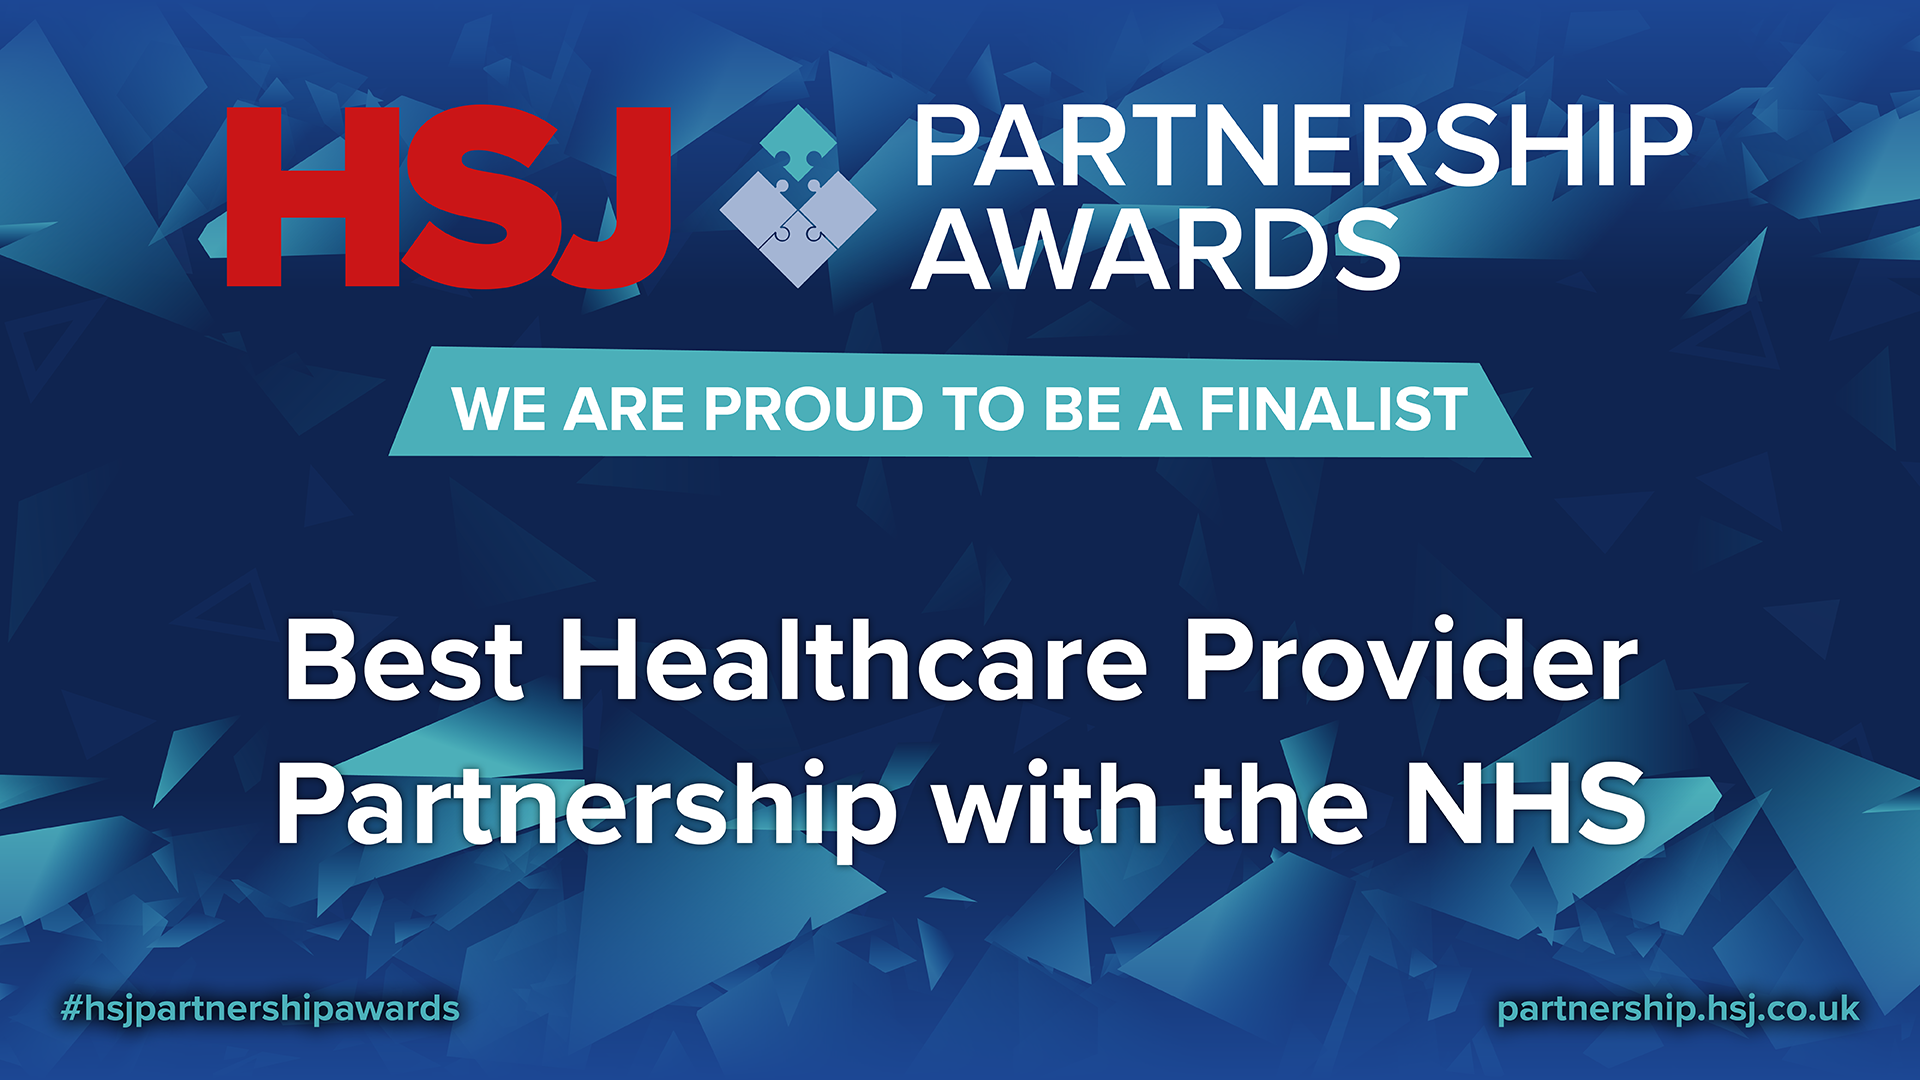 hsj award - best healthcare provider partnership